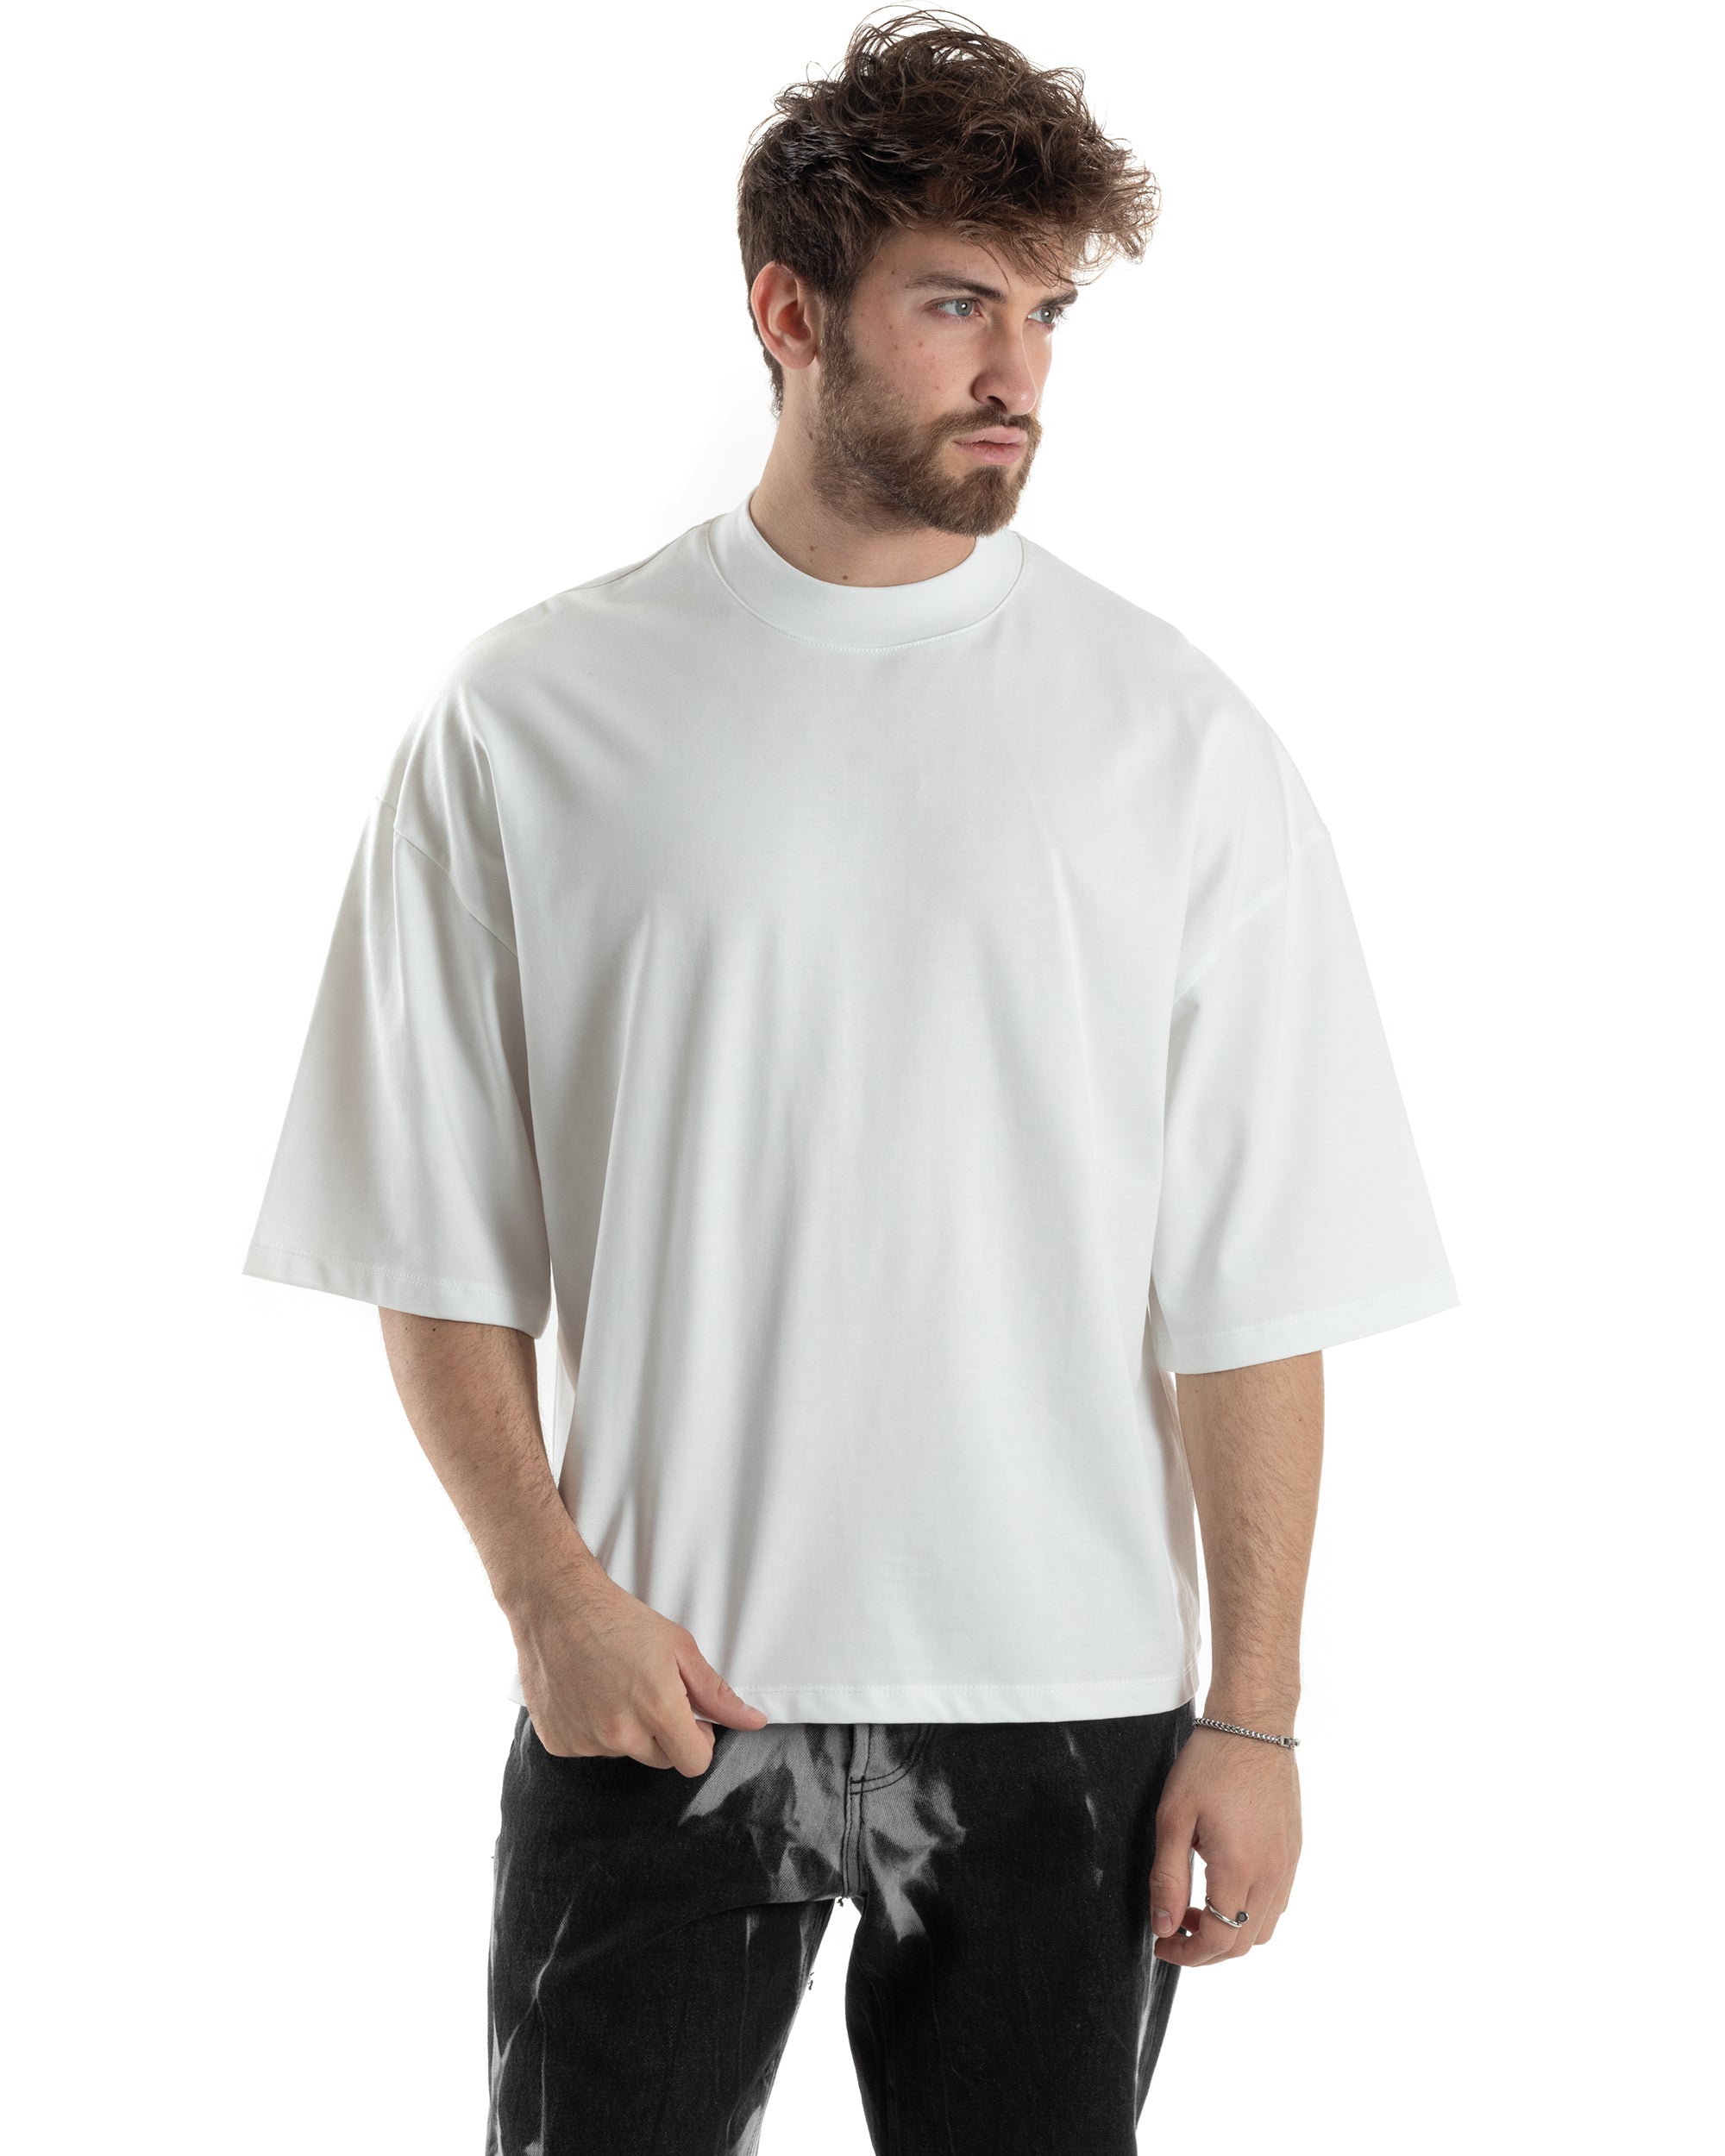 T-shirt Uomo Girocollo Boxy Fit Oversize Cotone Spalla Scesa Gola Alta Casual Basic Bianco GIOSAL-TS3024A